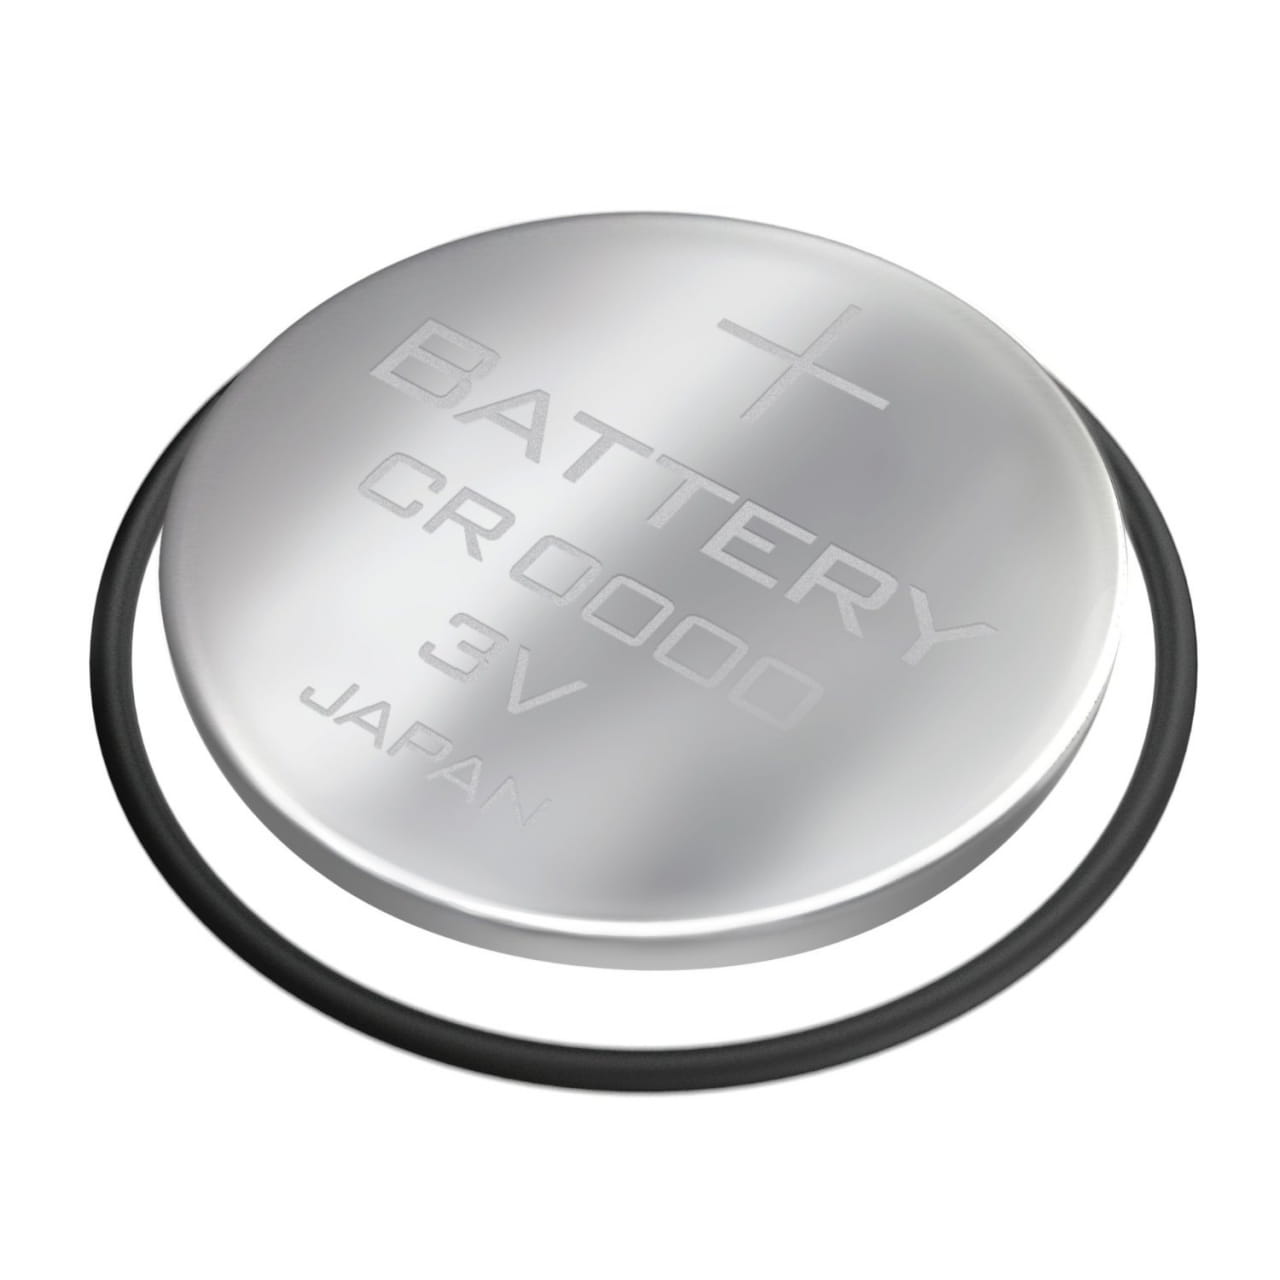 Sada baterie Polar Battery Kit RS400/ RS800